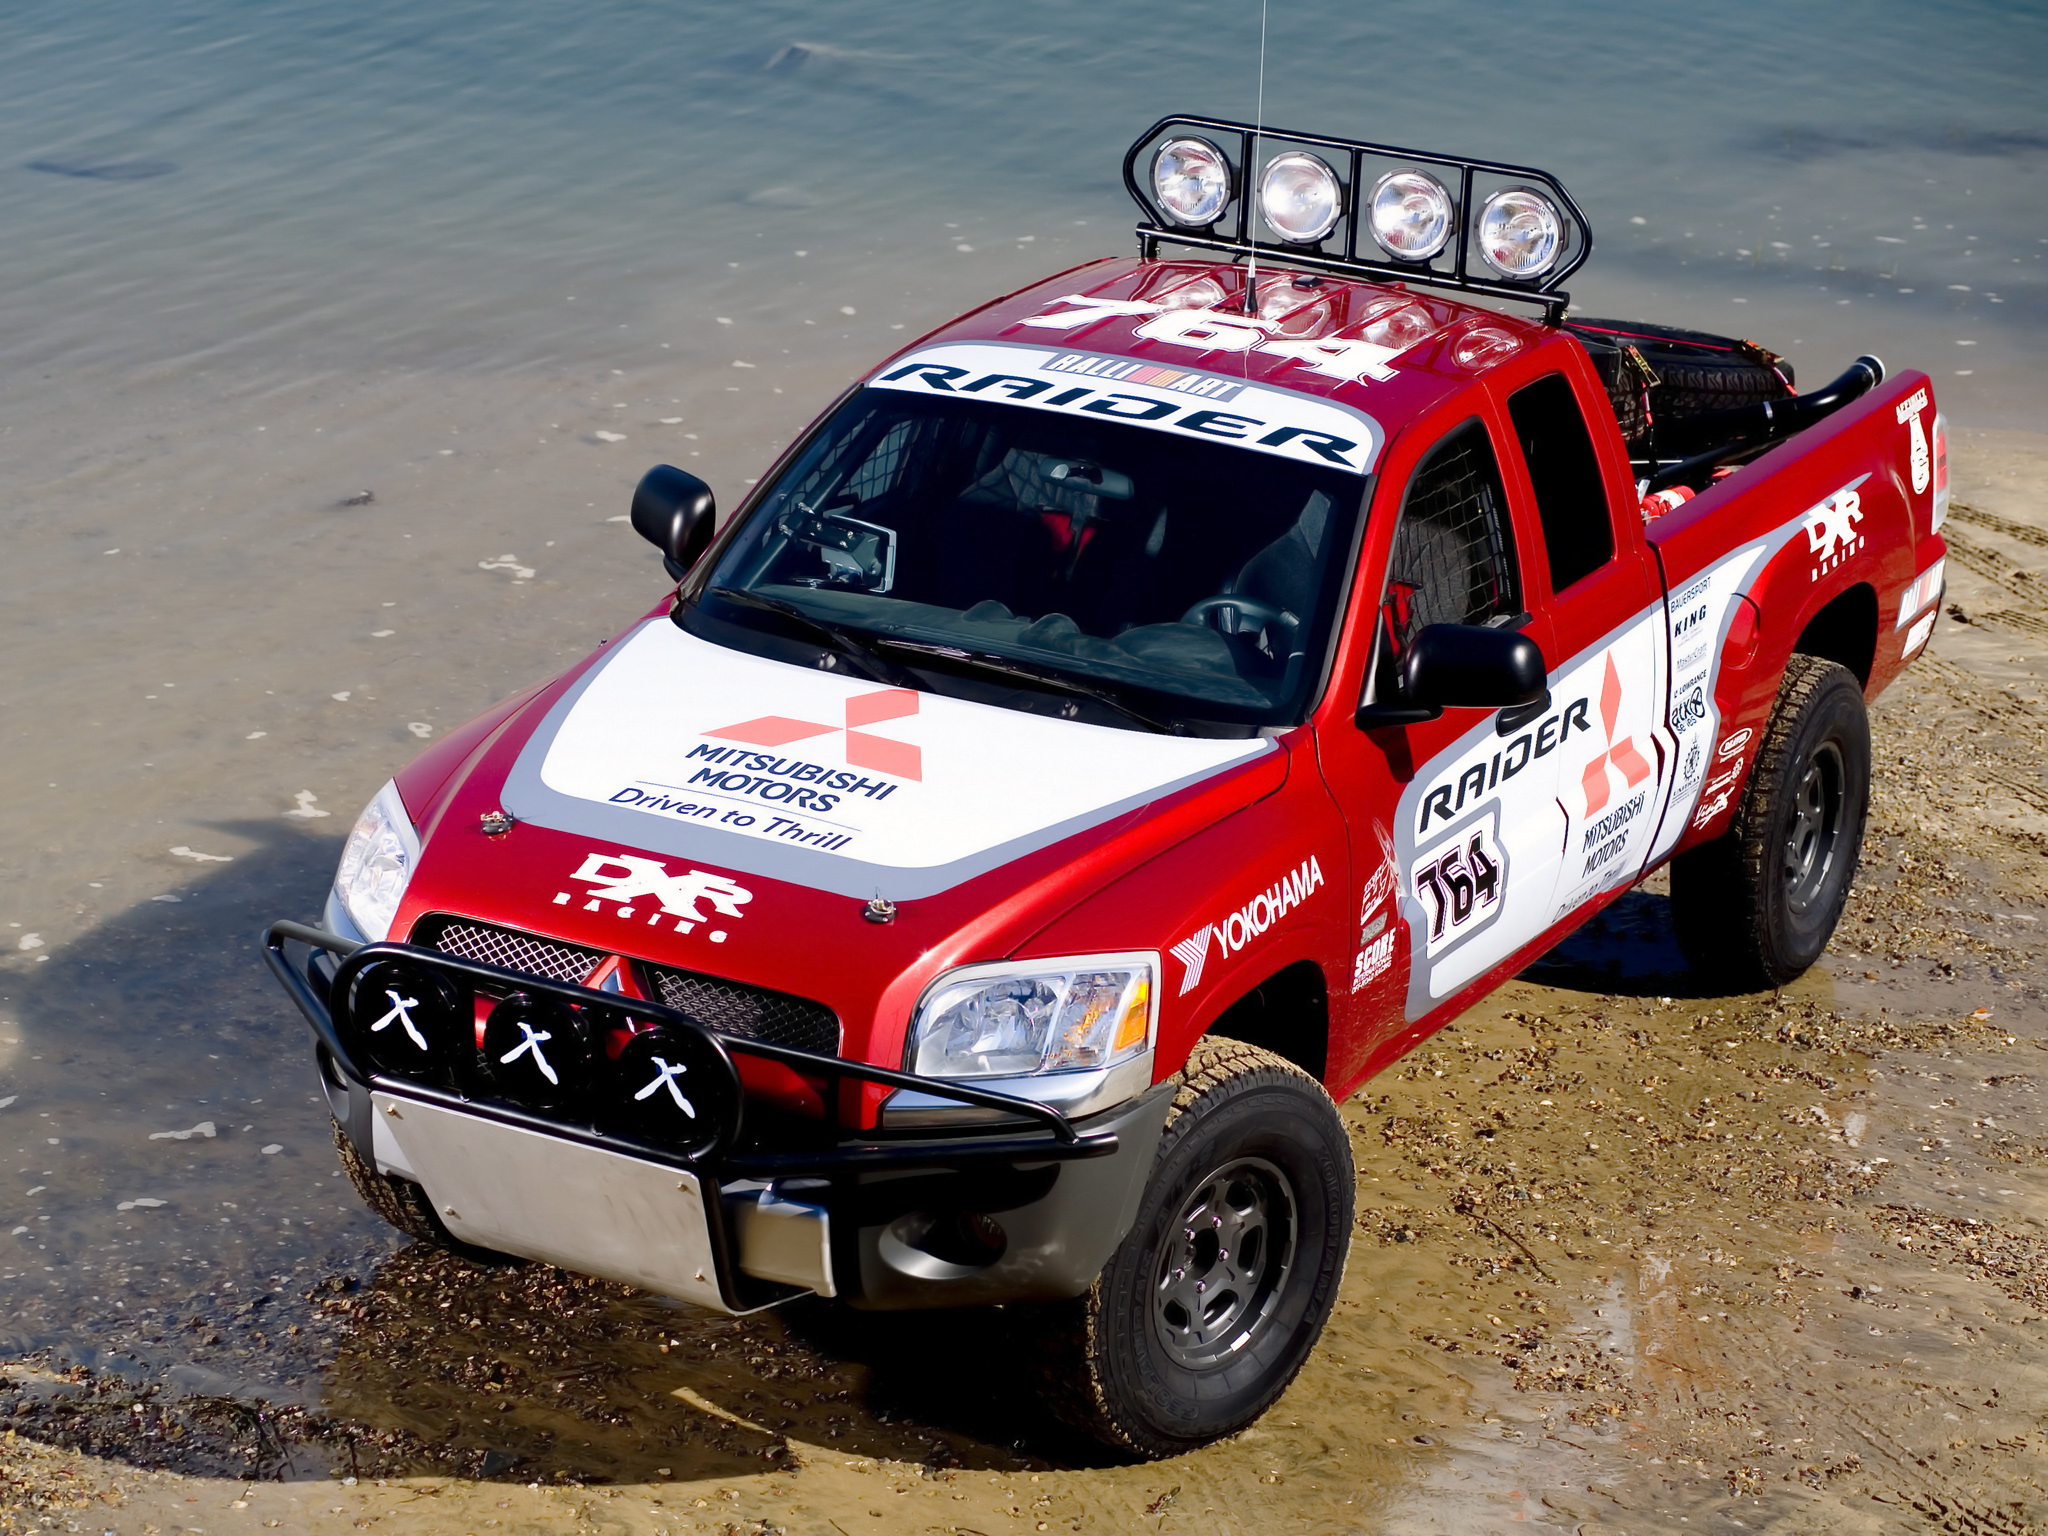 Download 2006 Mitsubishi Raider Baja Race Racing Truck Pickup Offroad Wallpapers Hd Desktop And Mobile Backgrounds PSD Mockup Templates